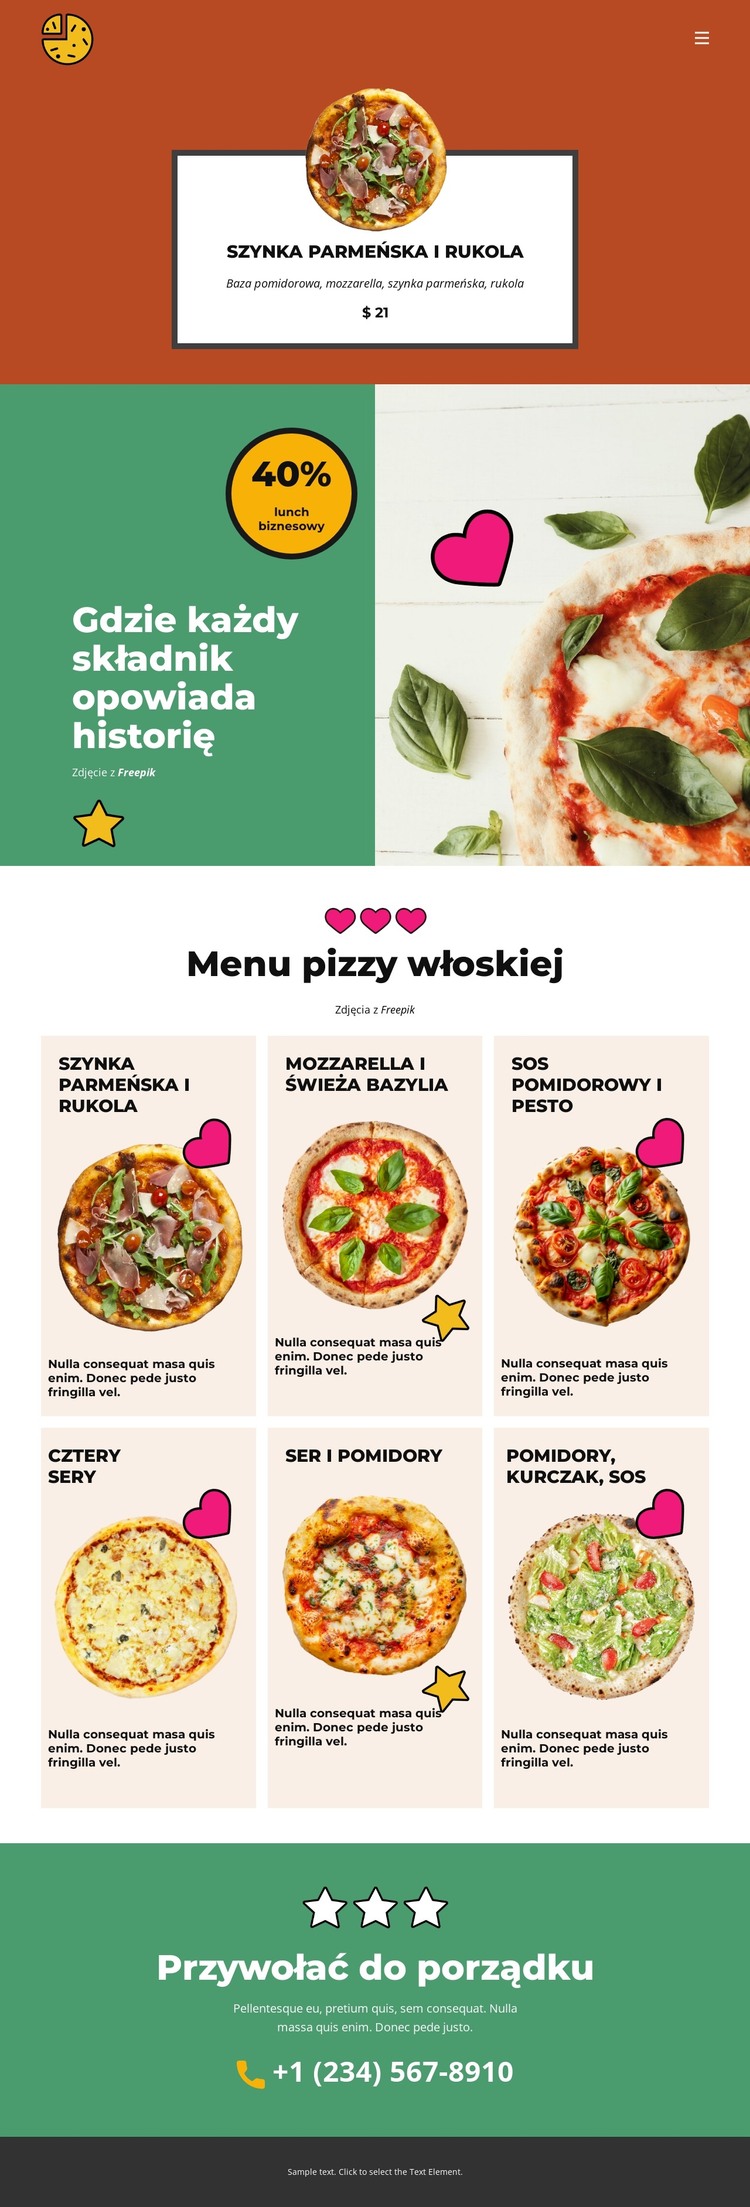 Fun Facts about Pizza Szablon HTML